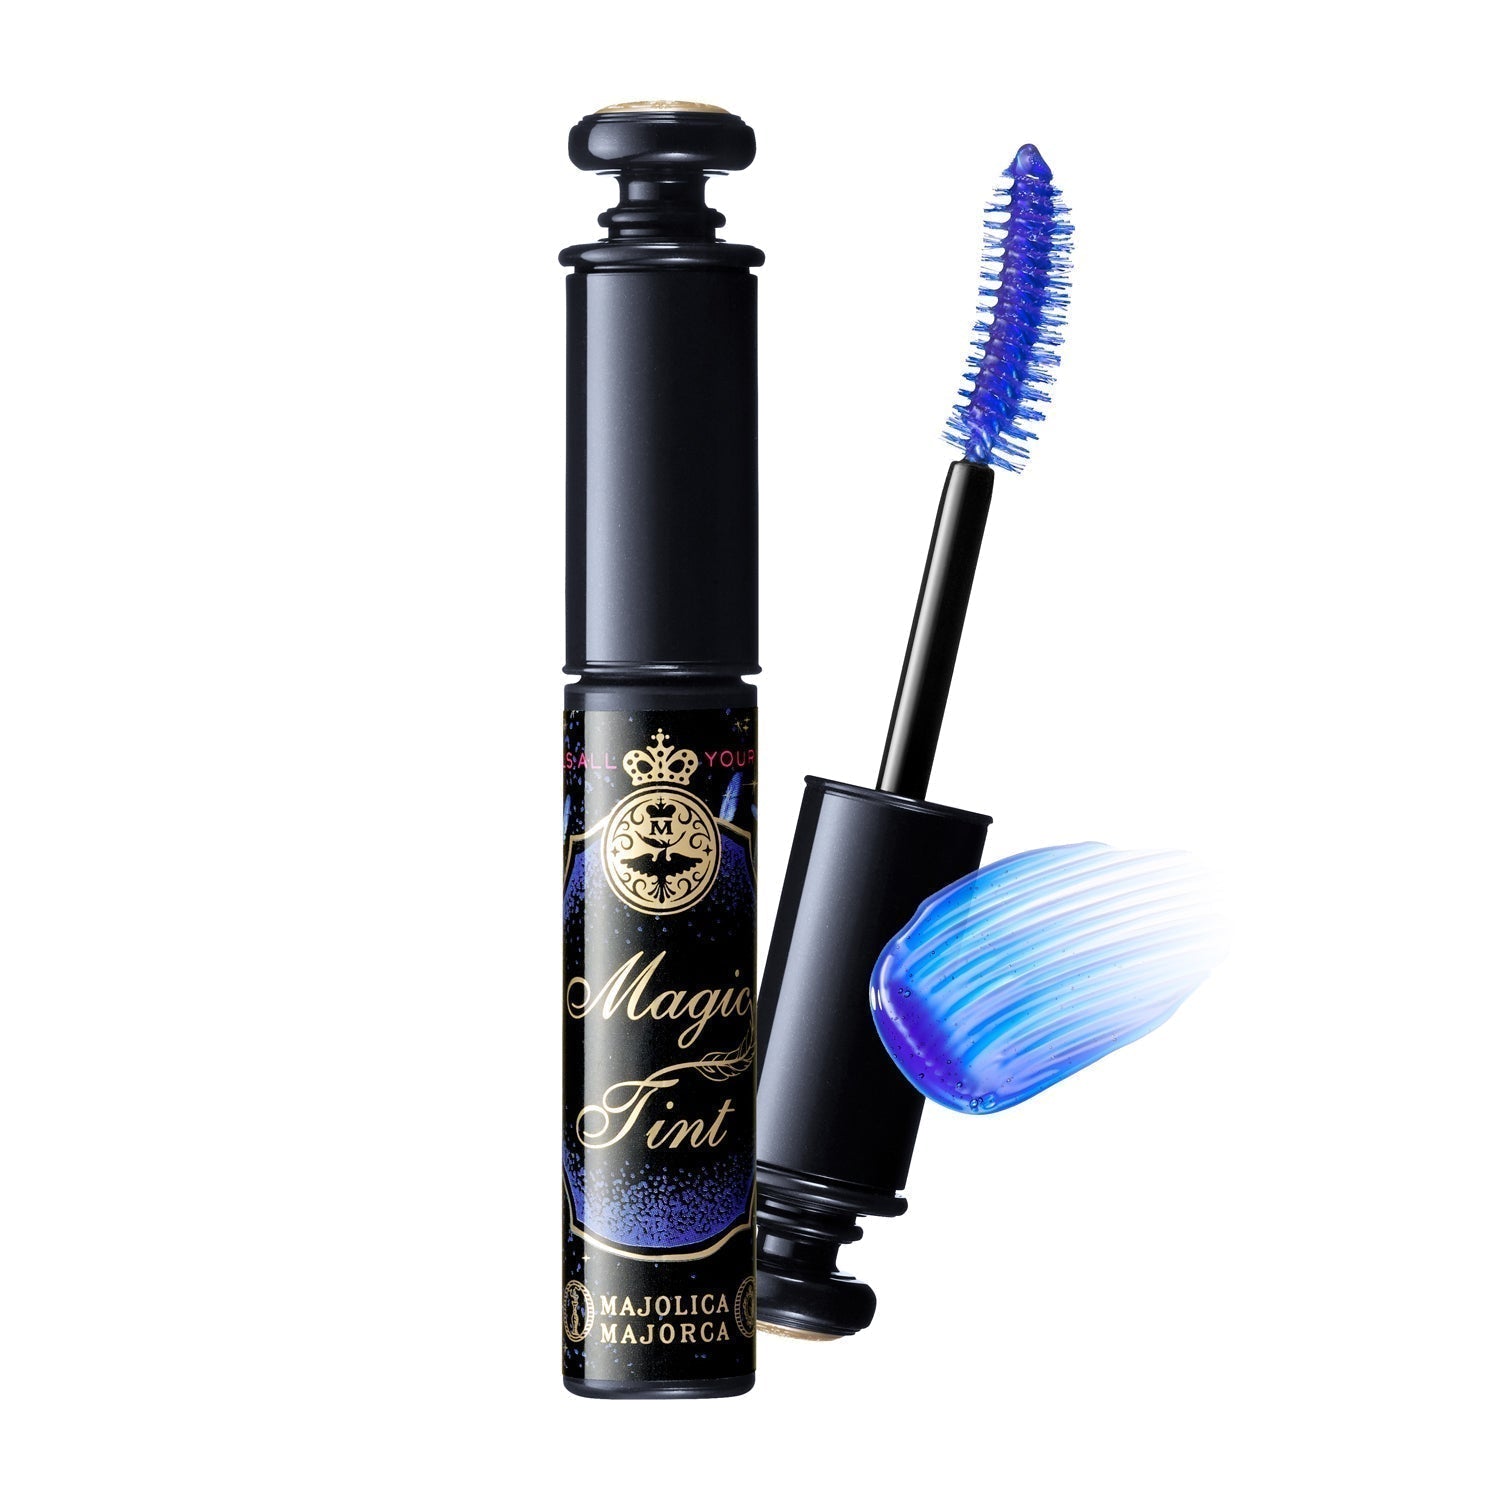 Shiseido Majolica Majorca Magic Tint Lash Mascara Magic Blue 6g